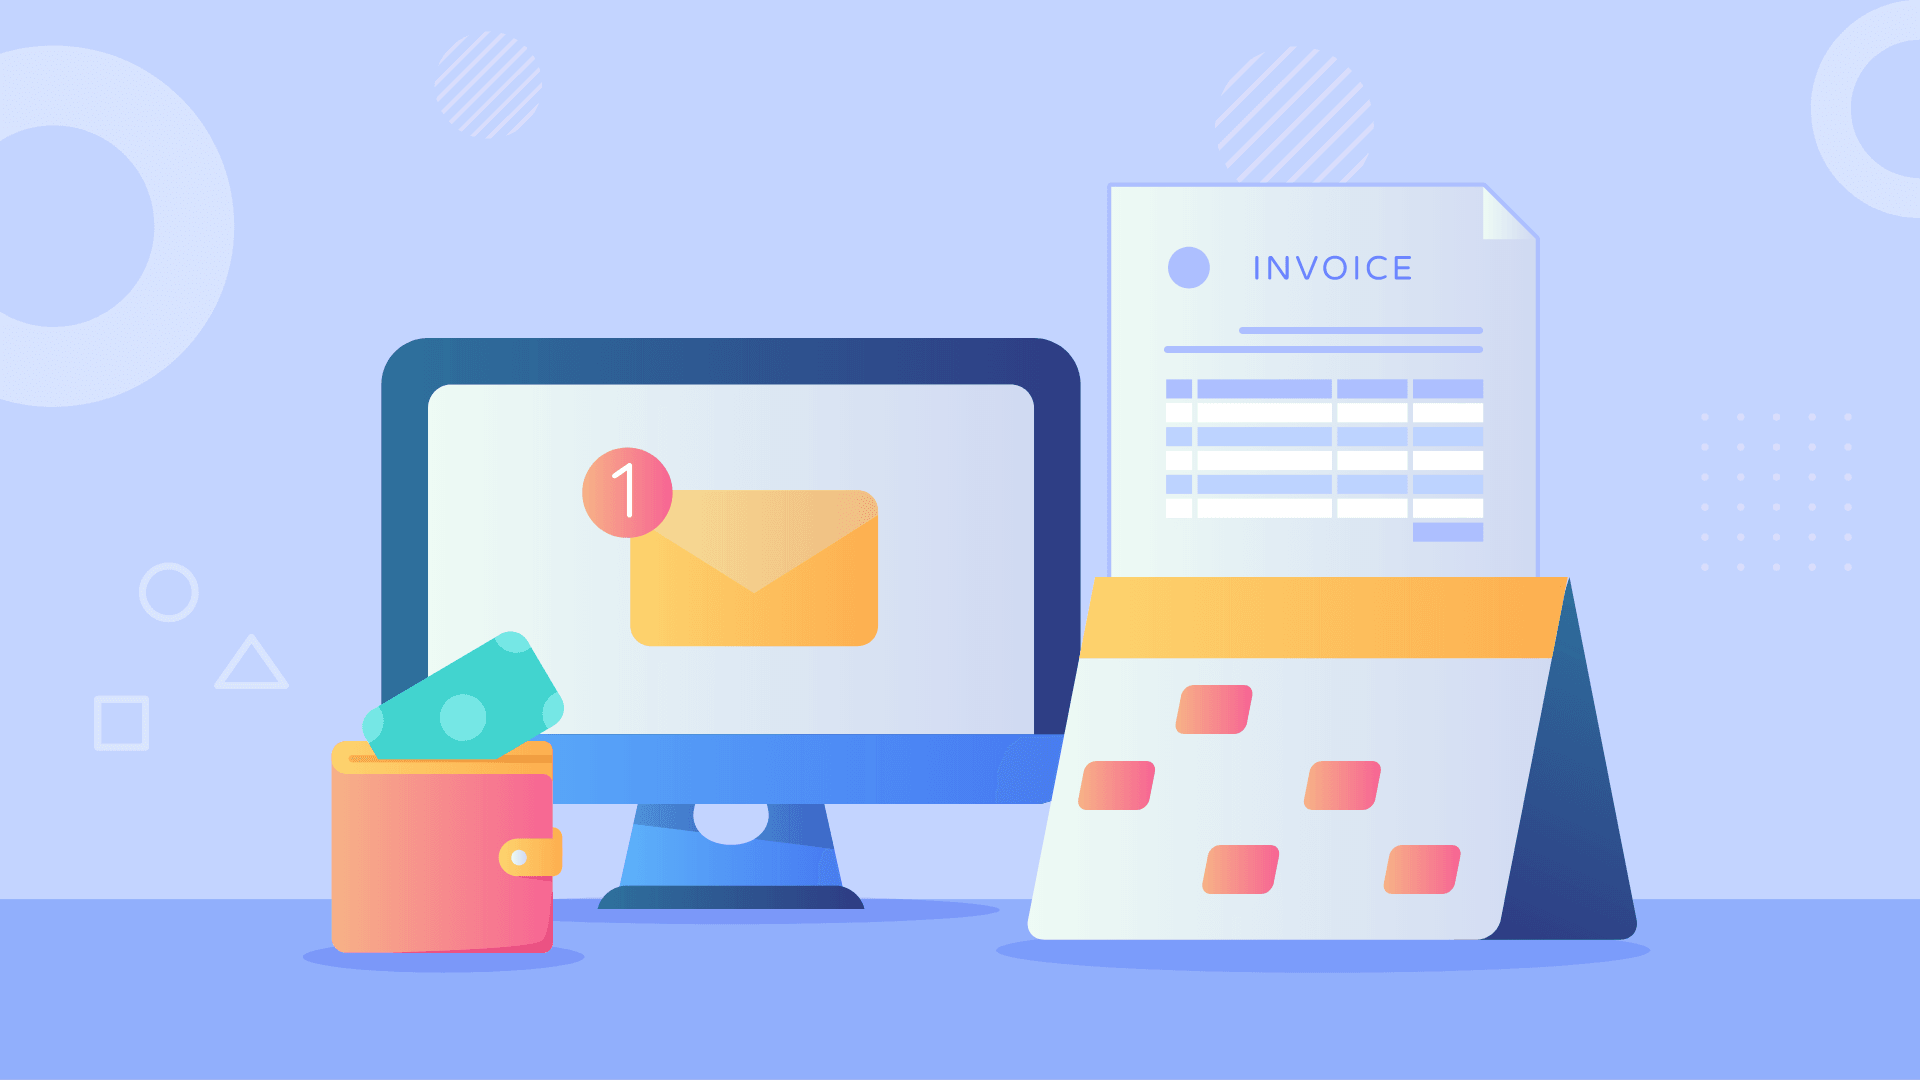 invoice-automation-illustration-alt